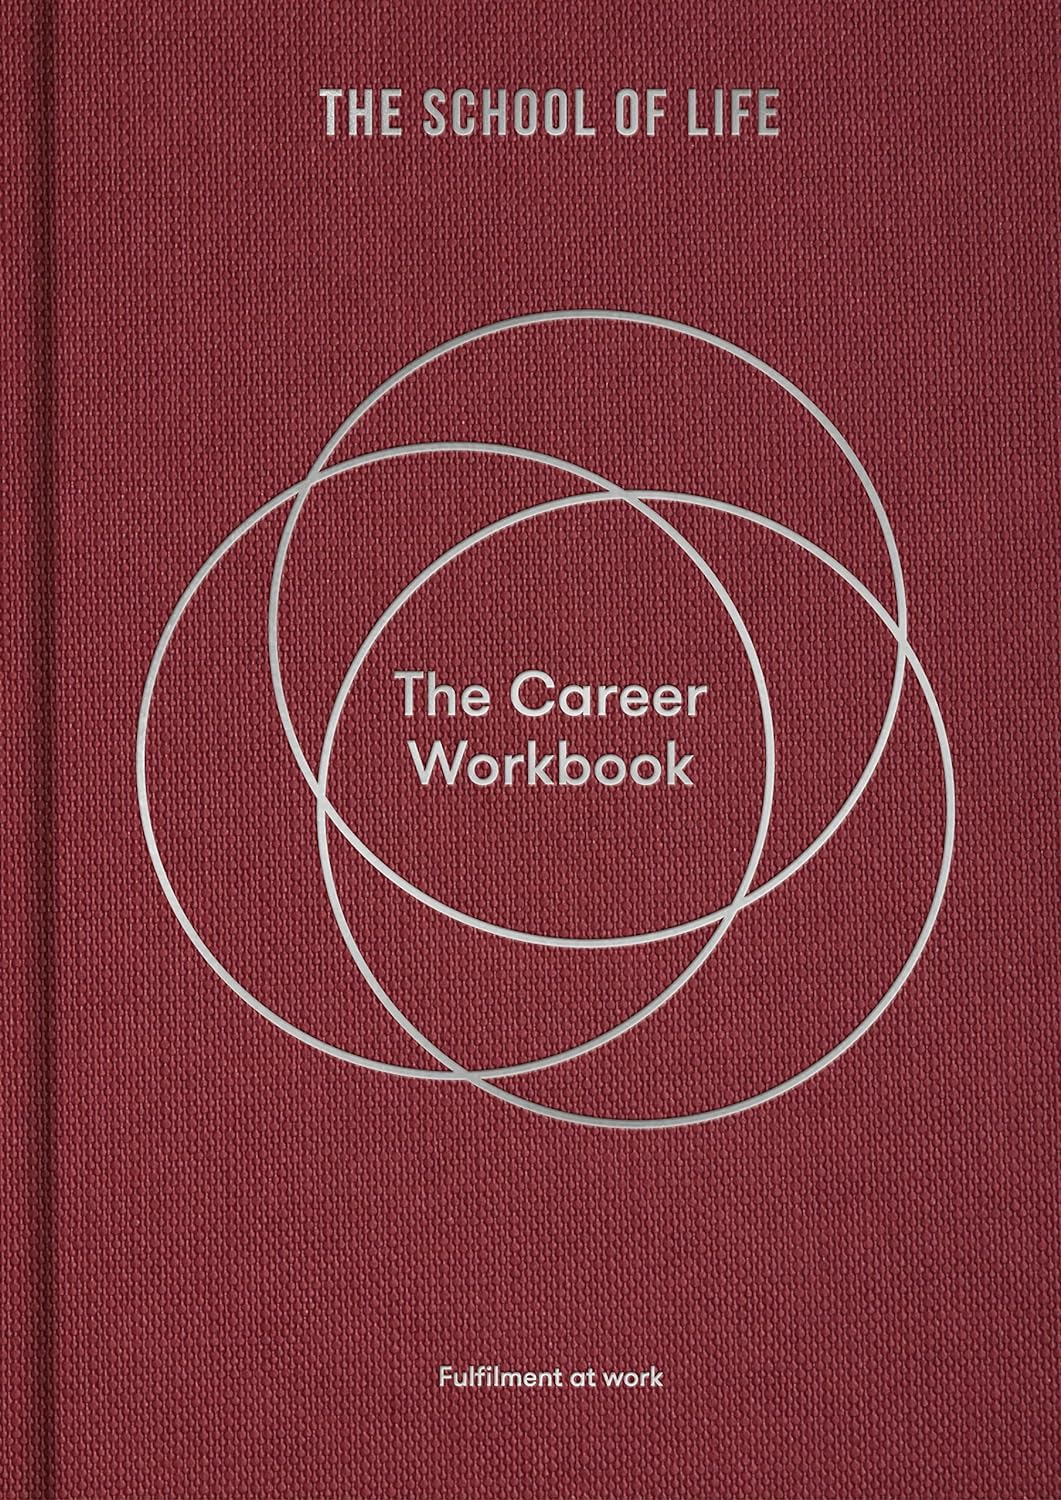 The Career Workbook - Fulfilment at Work